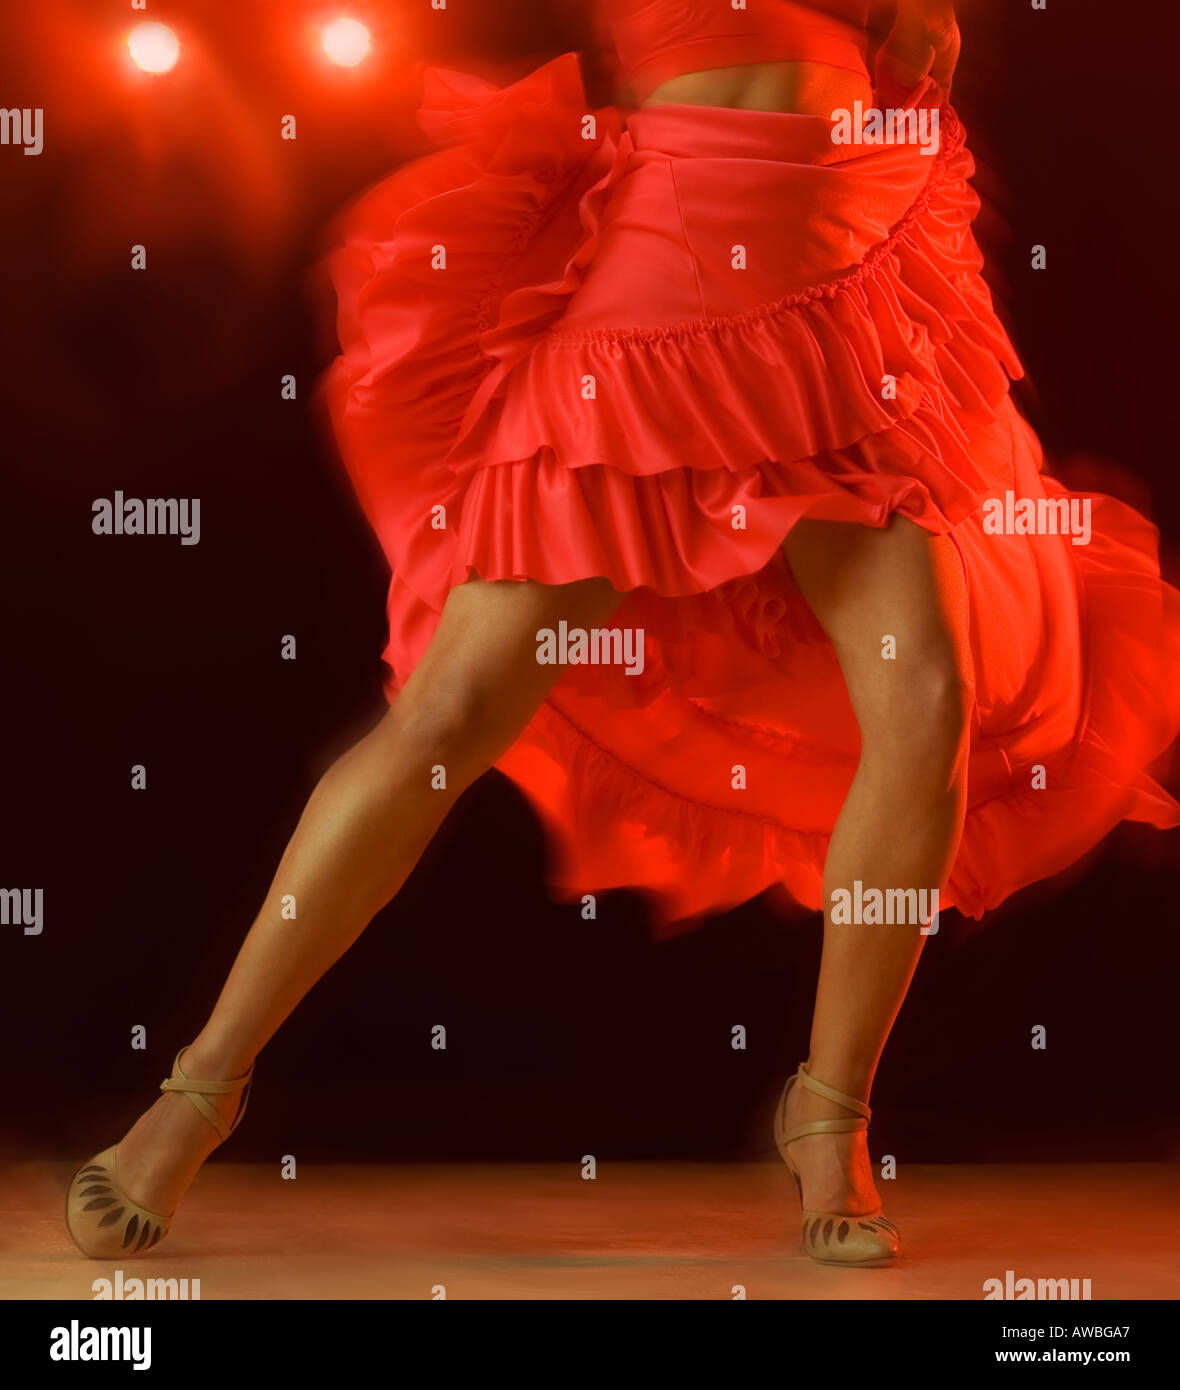 Woman dancing at nightclub Stock Photo - Alamy